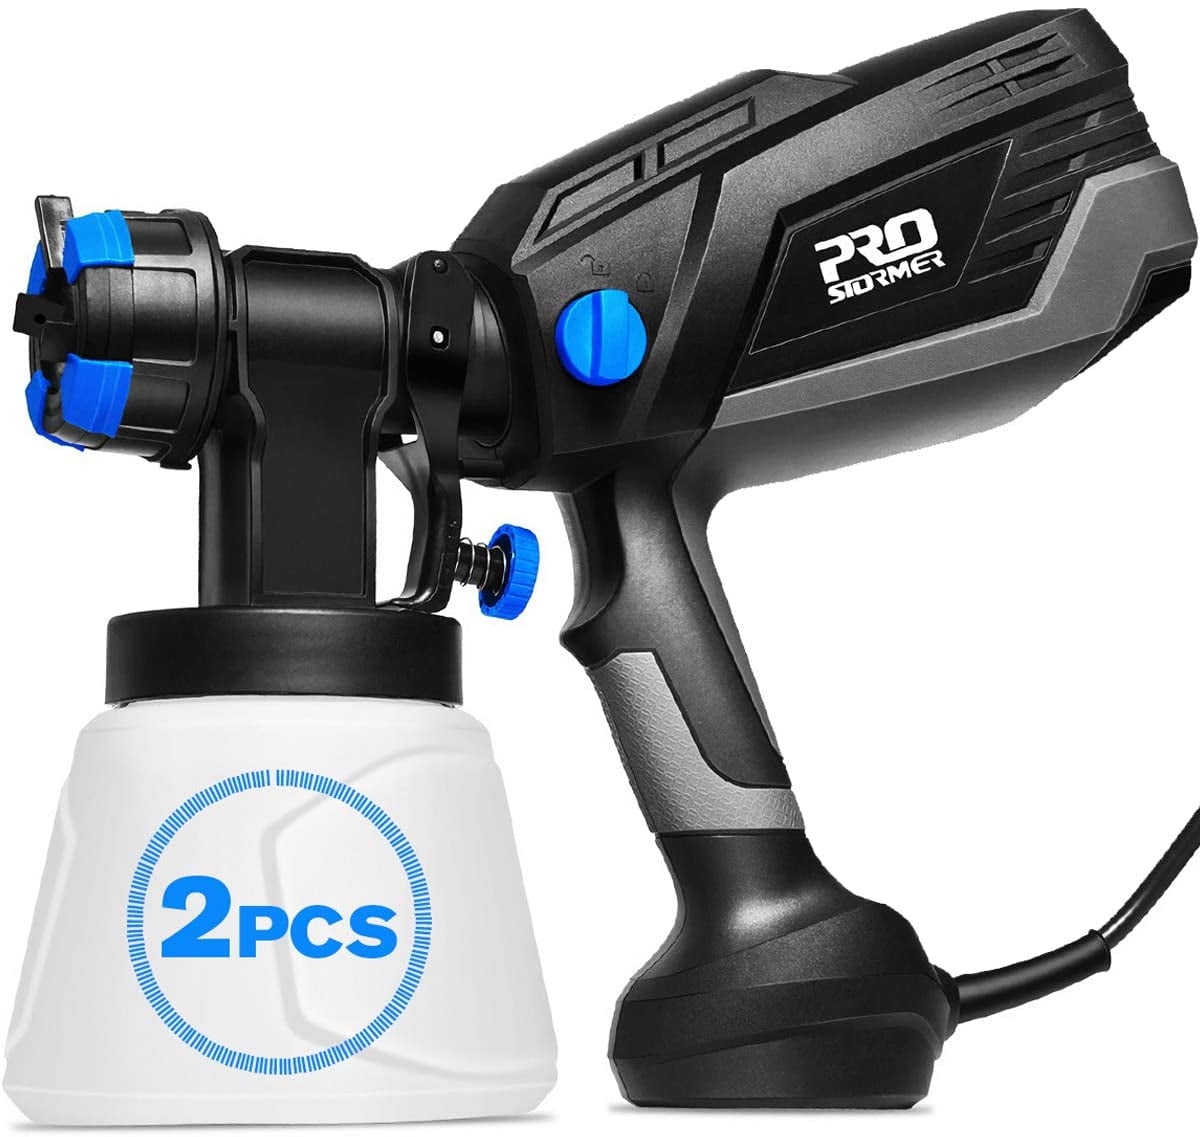 2pcs Electric Paint Sprayer Spray Gun Adjustable Valve Knob Flow Control 800ml 